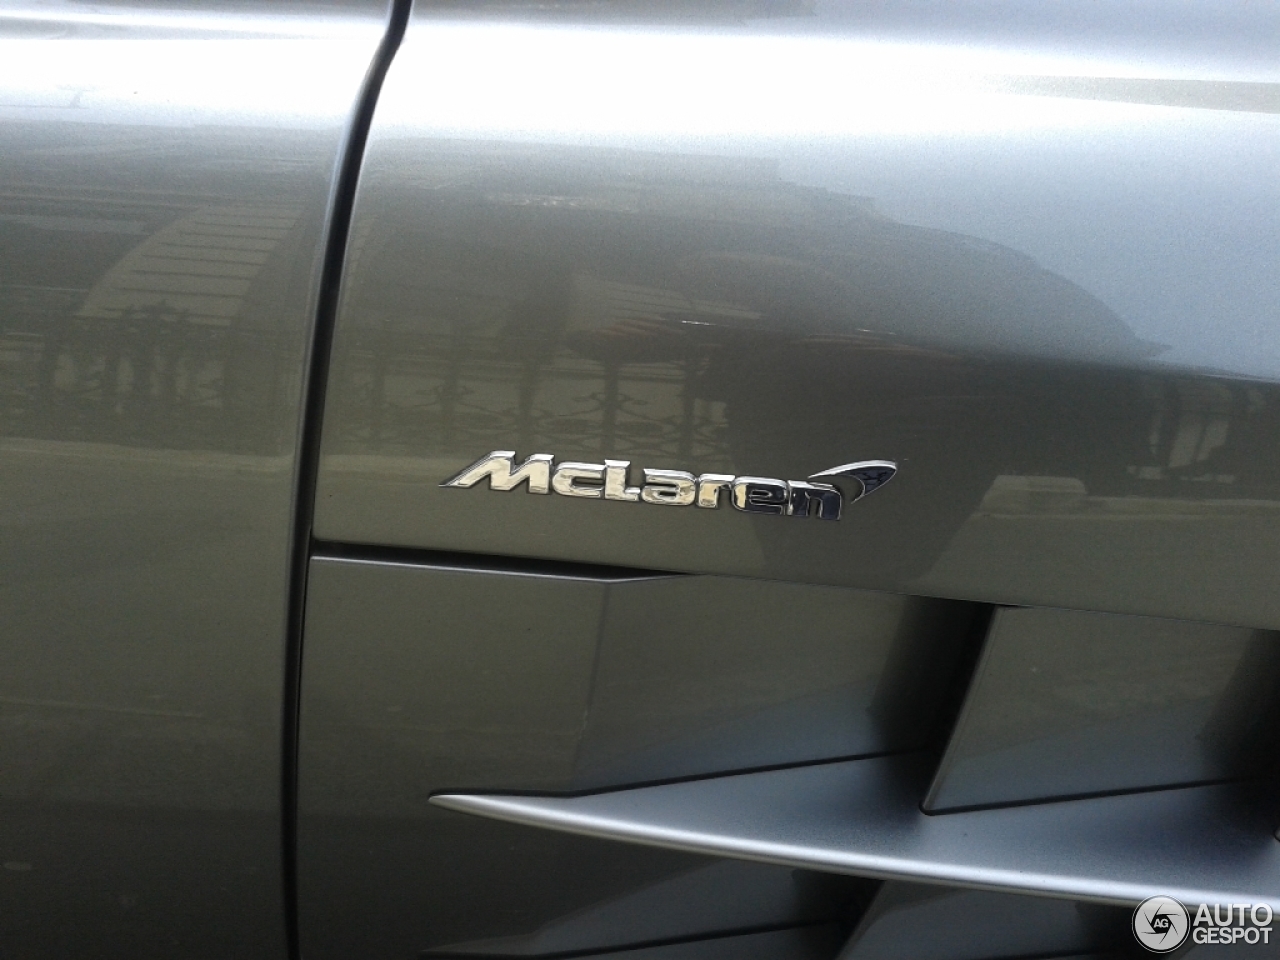 Mercedes-Benz SLR McLaren Roadster